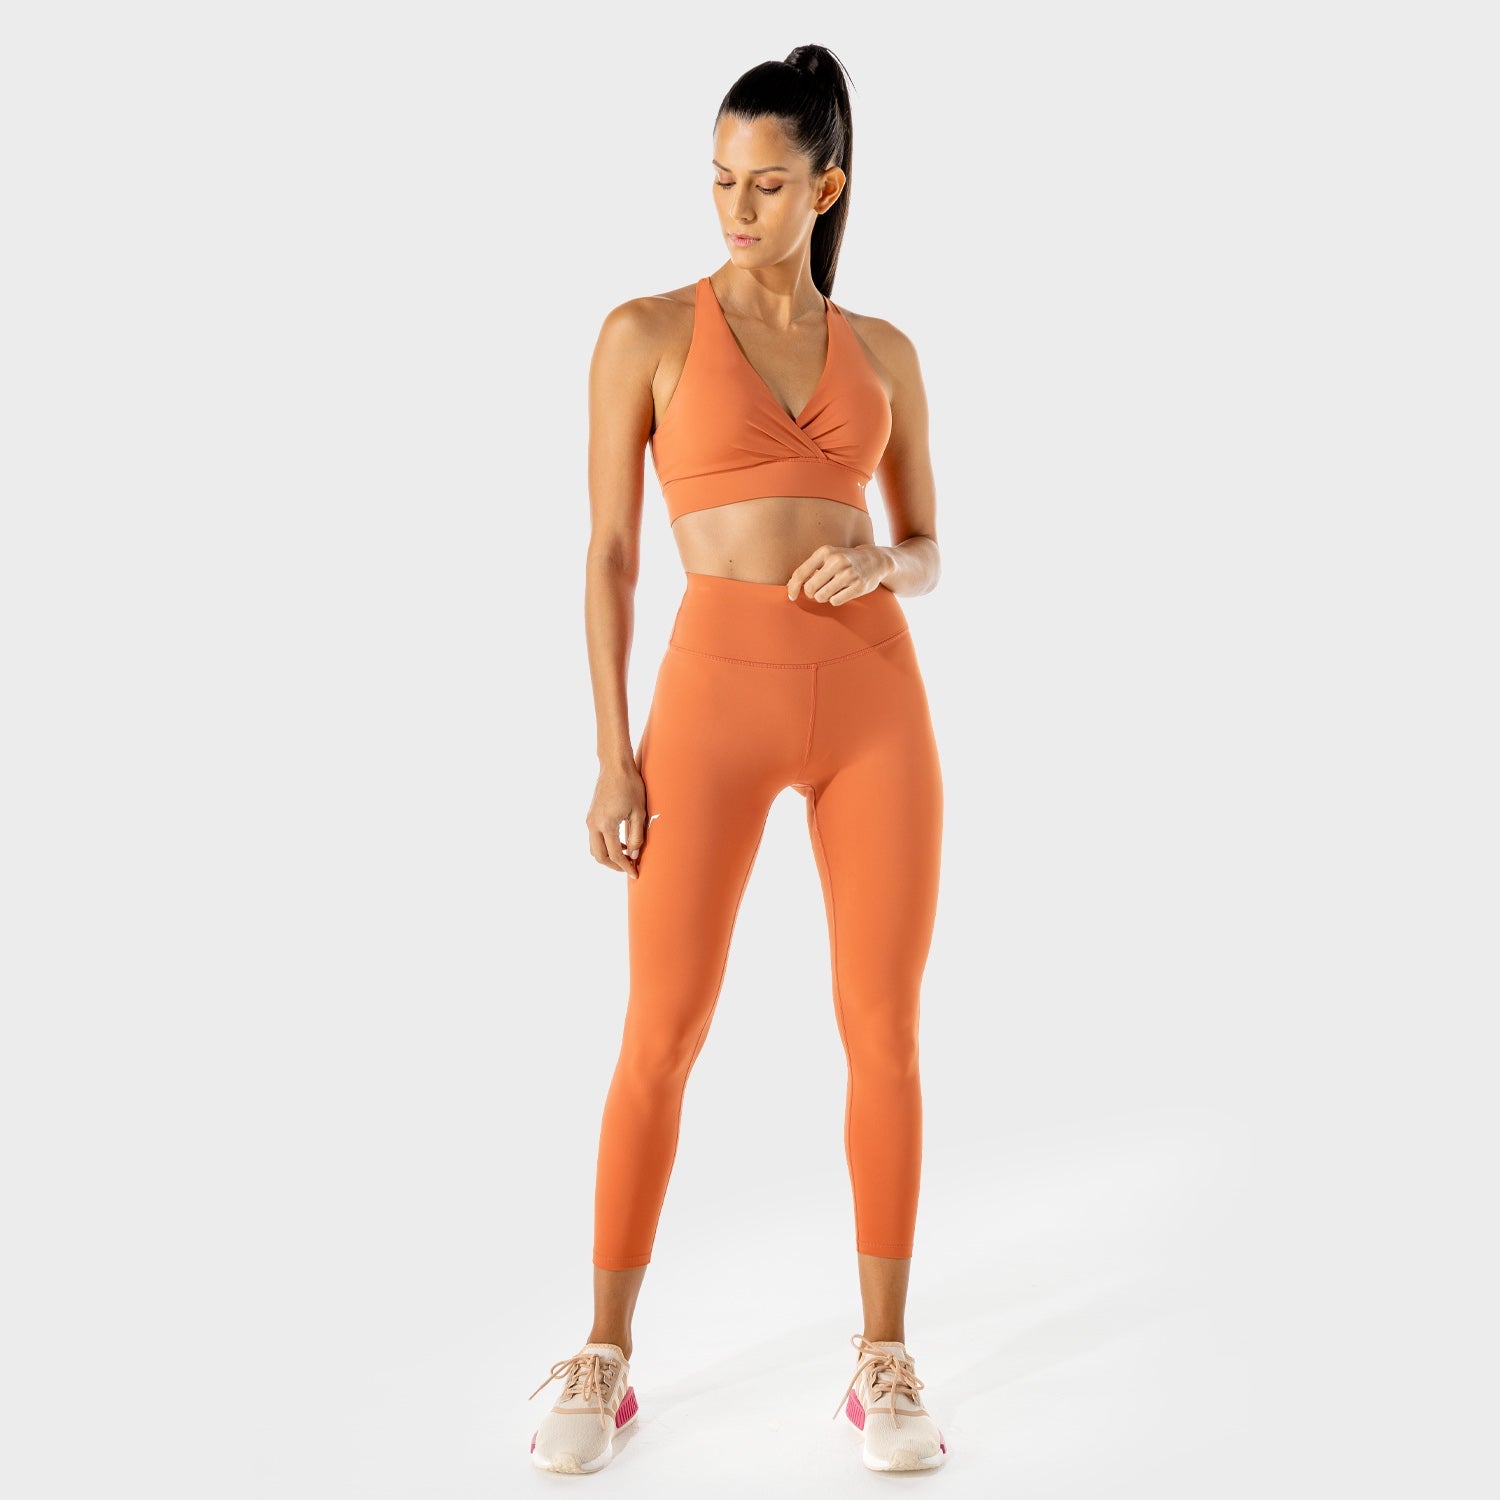 squatwolf-workout-clothes-womens-fitness-wrap-sports-bra-orange-sports-bra-for-gym